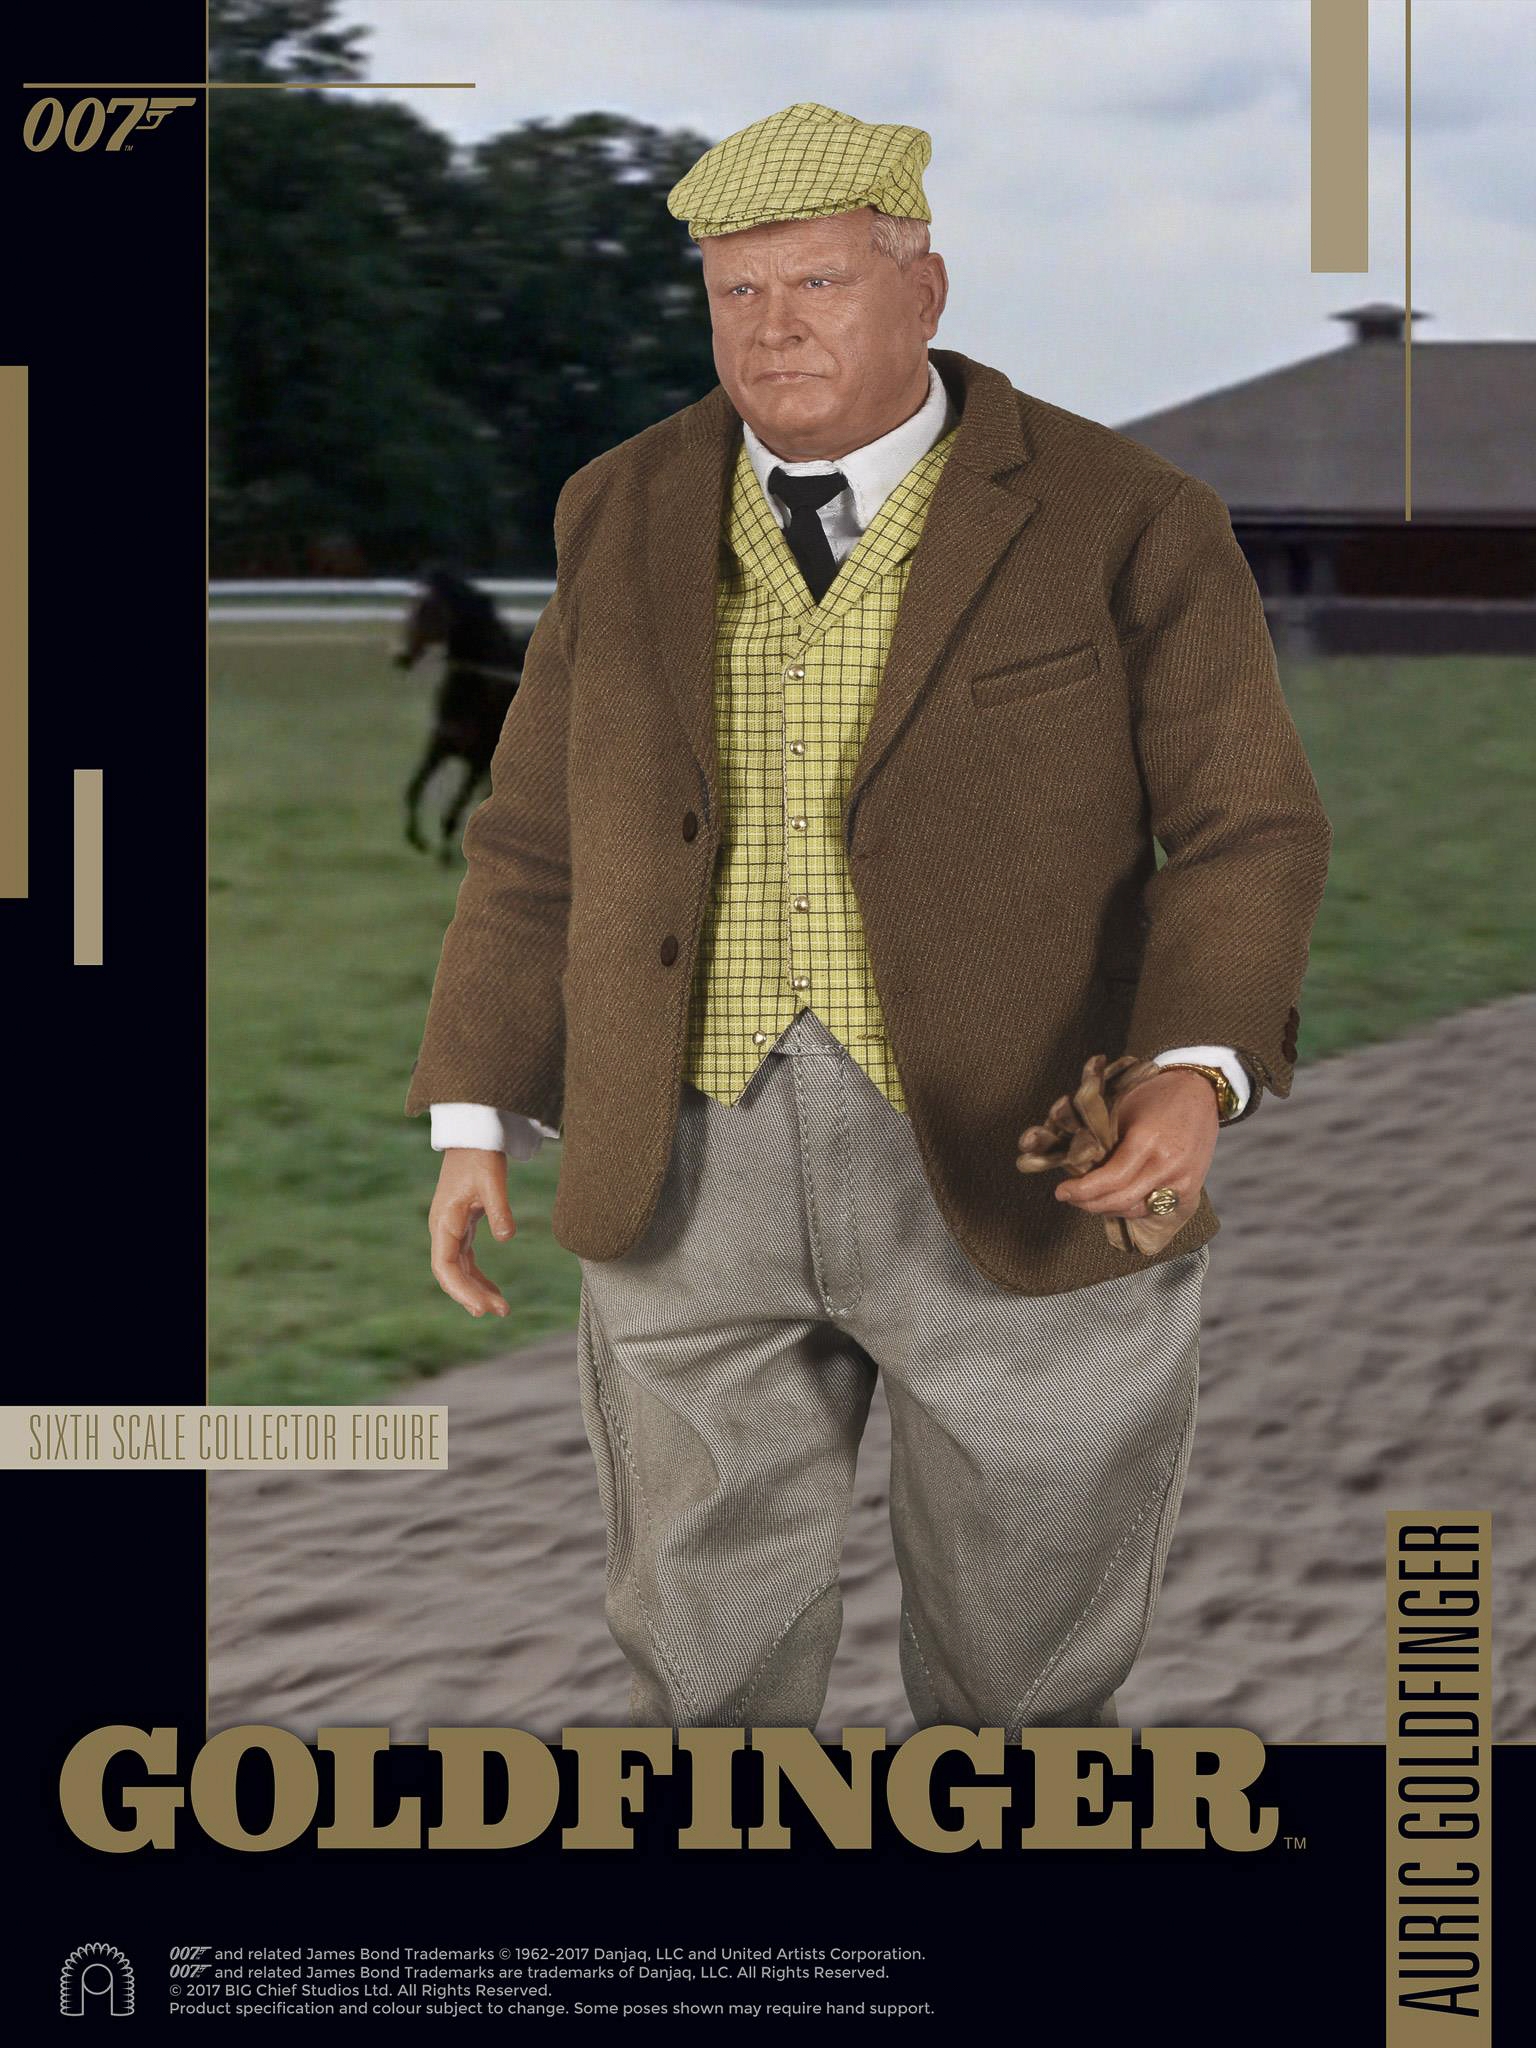 Big-Chief-James-Bond-Goldfinger-Oddjob-Full-Reveal-026.jpg